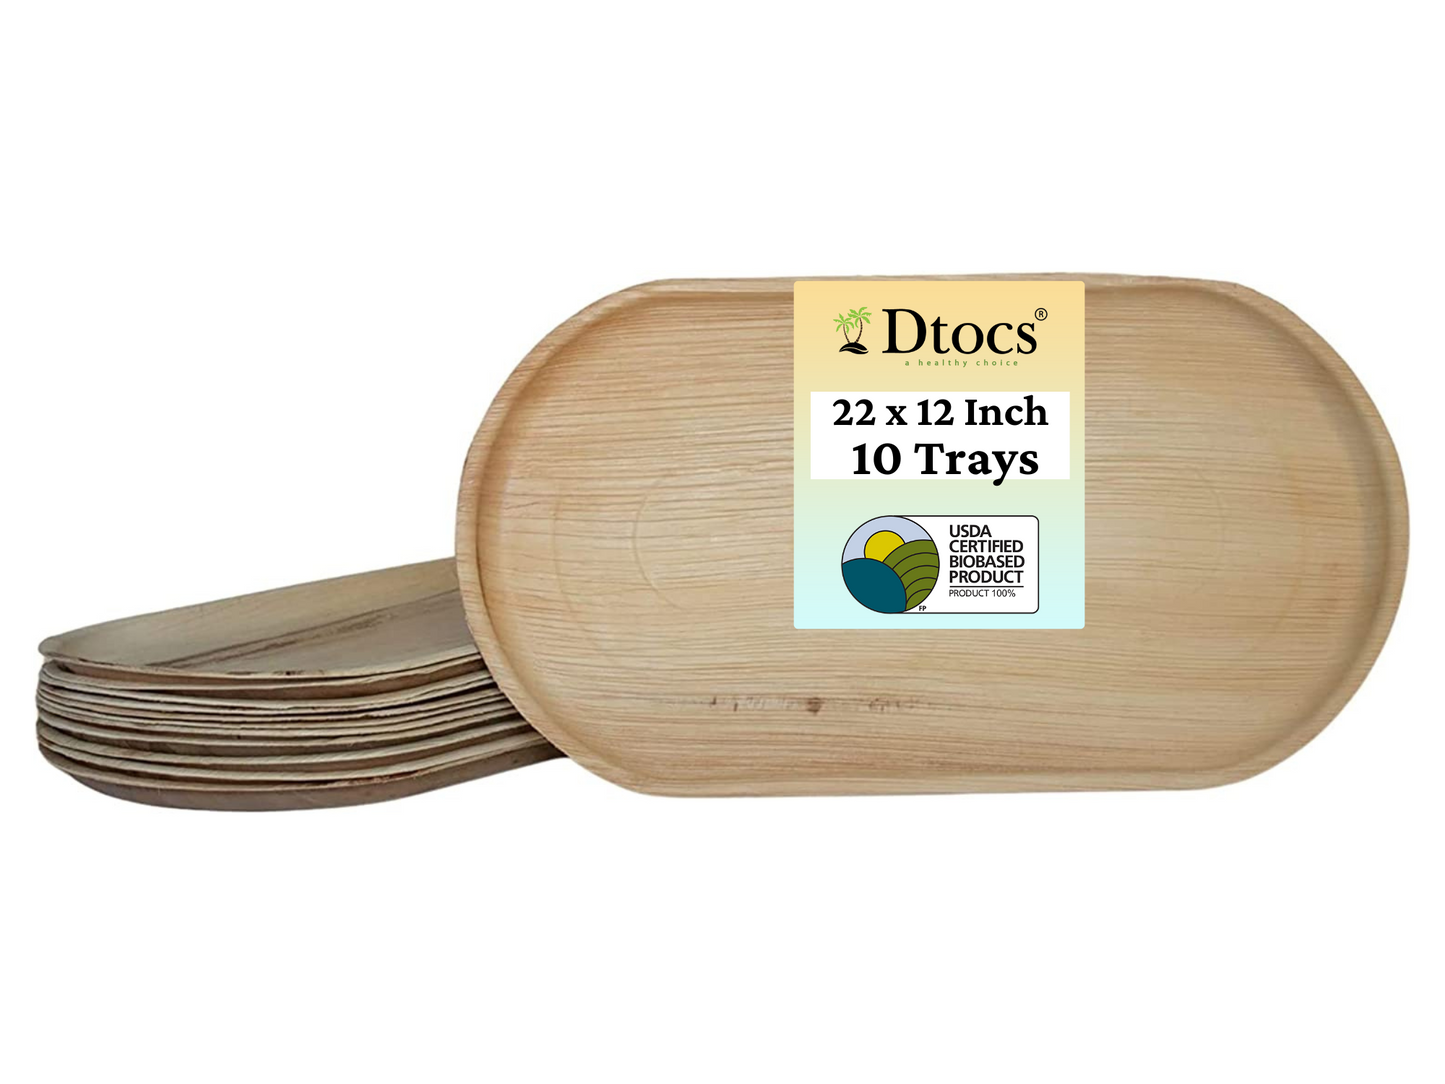 Dtocs Charcuterie Board 22"x12" Palm Leaf Tray